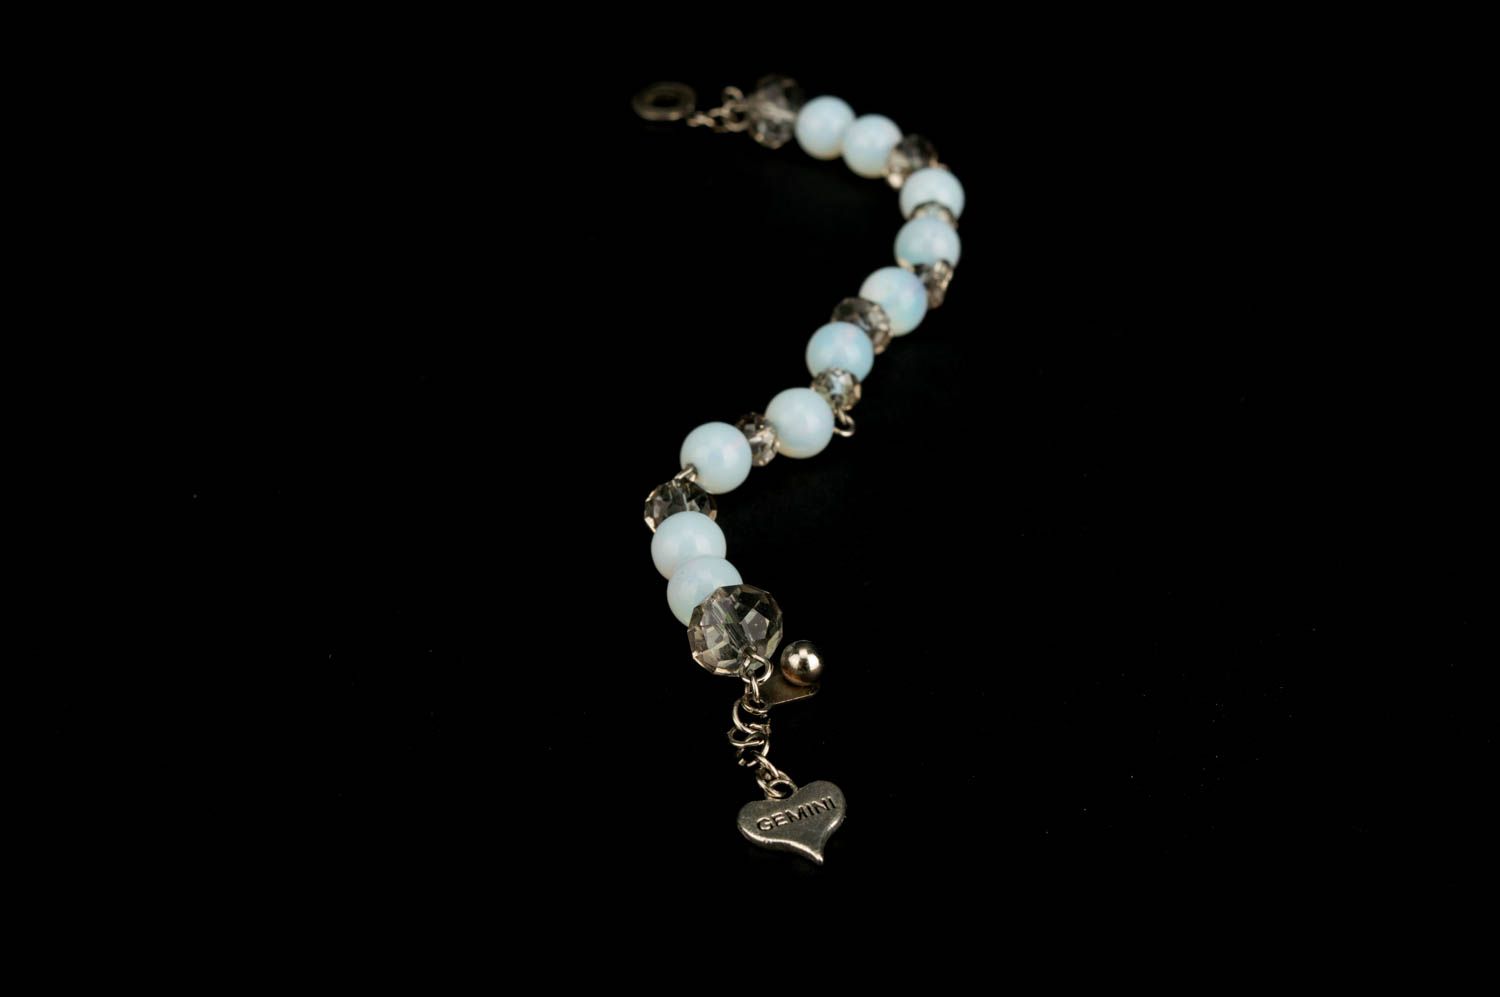 Transparent beads adjustable bracelet with heart shape charm for women photo 3